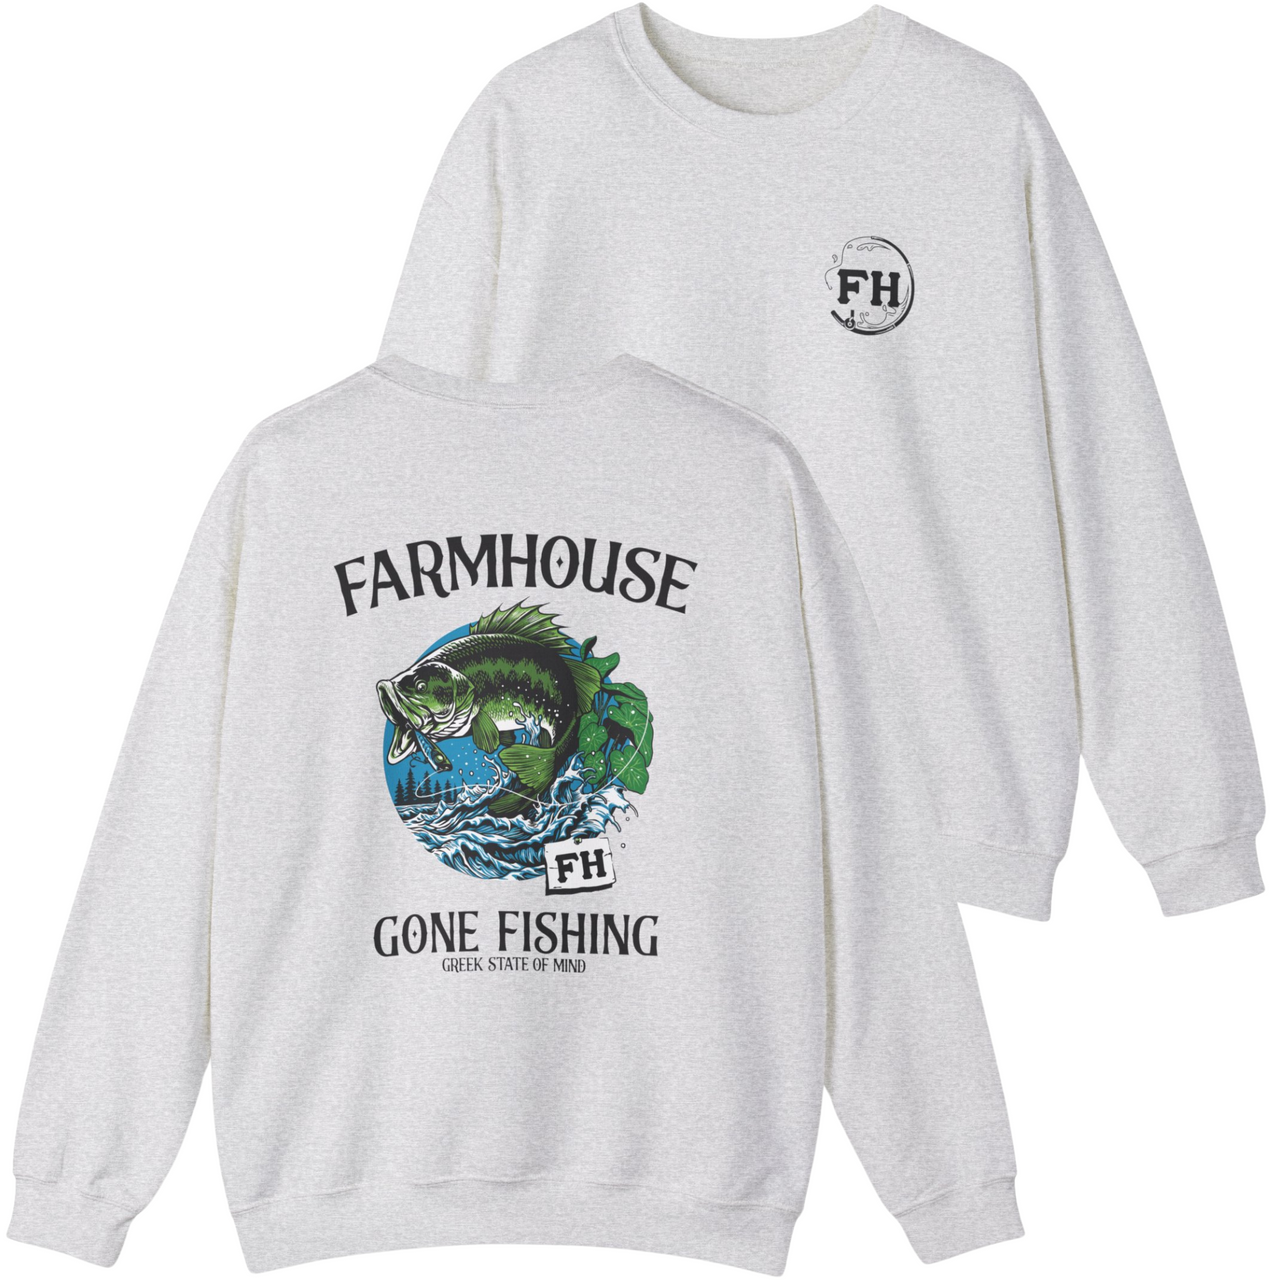 FarmHouse Graphic Crewneck Sweatshirt | Gone Fishing